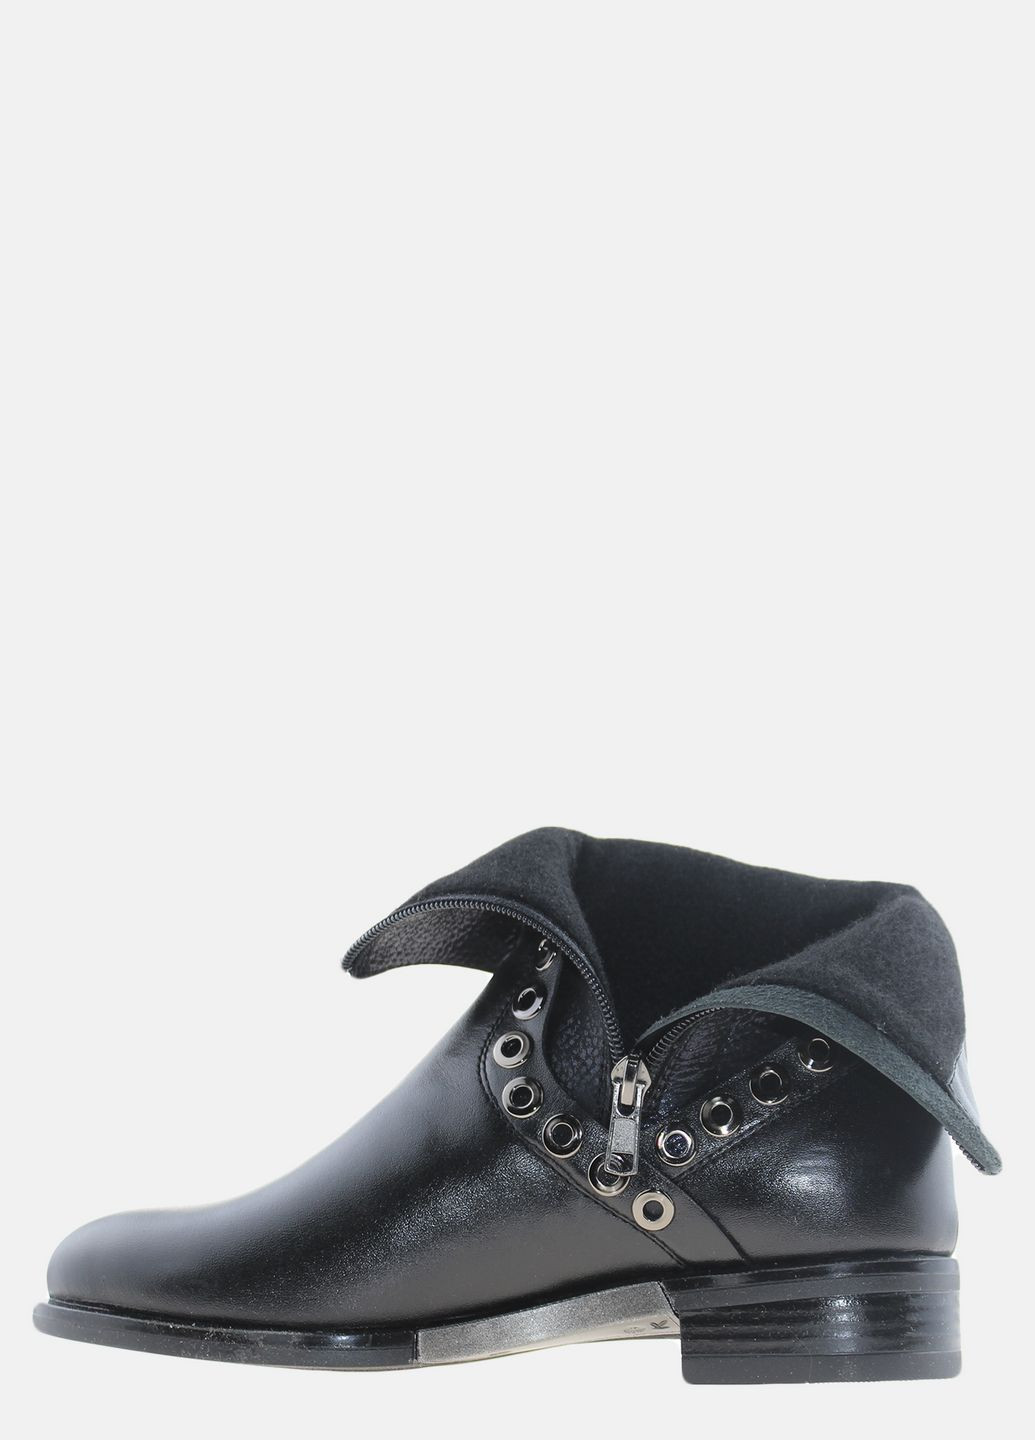 Осенние ботинки r1690 mavi Prellesta